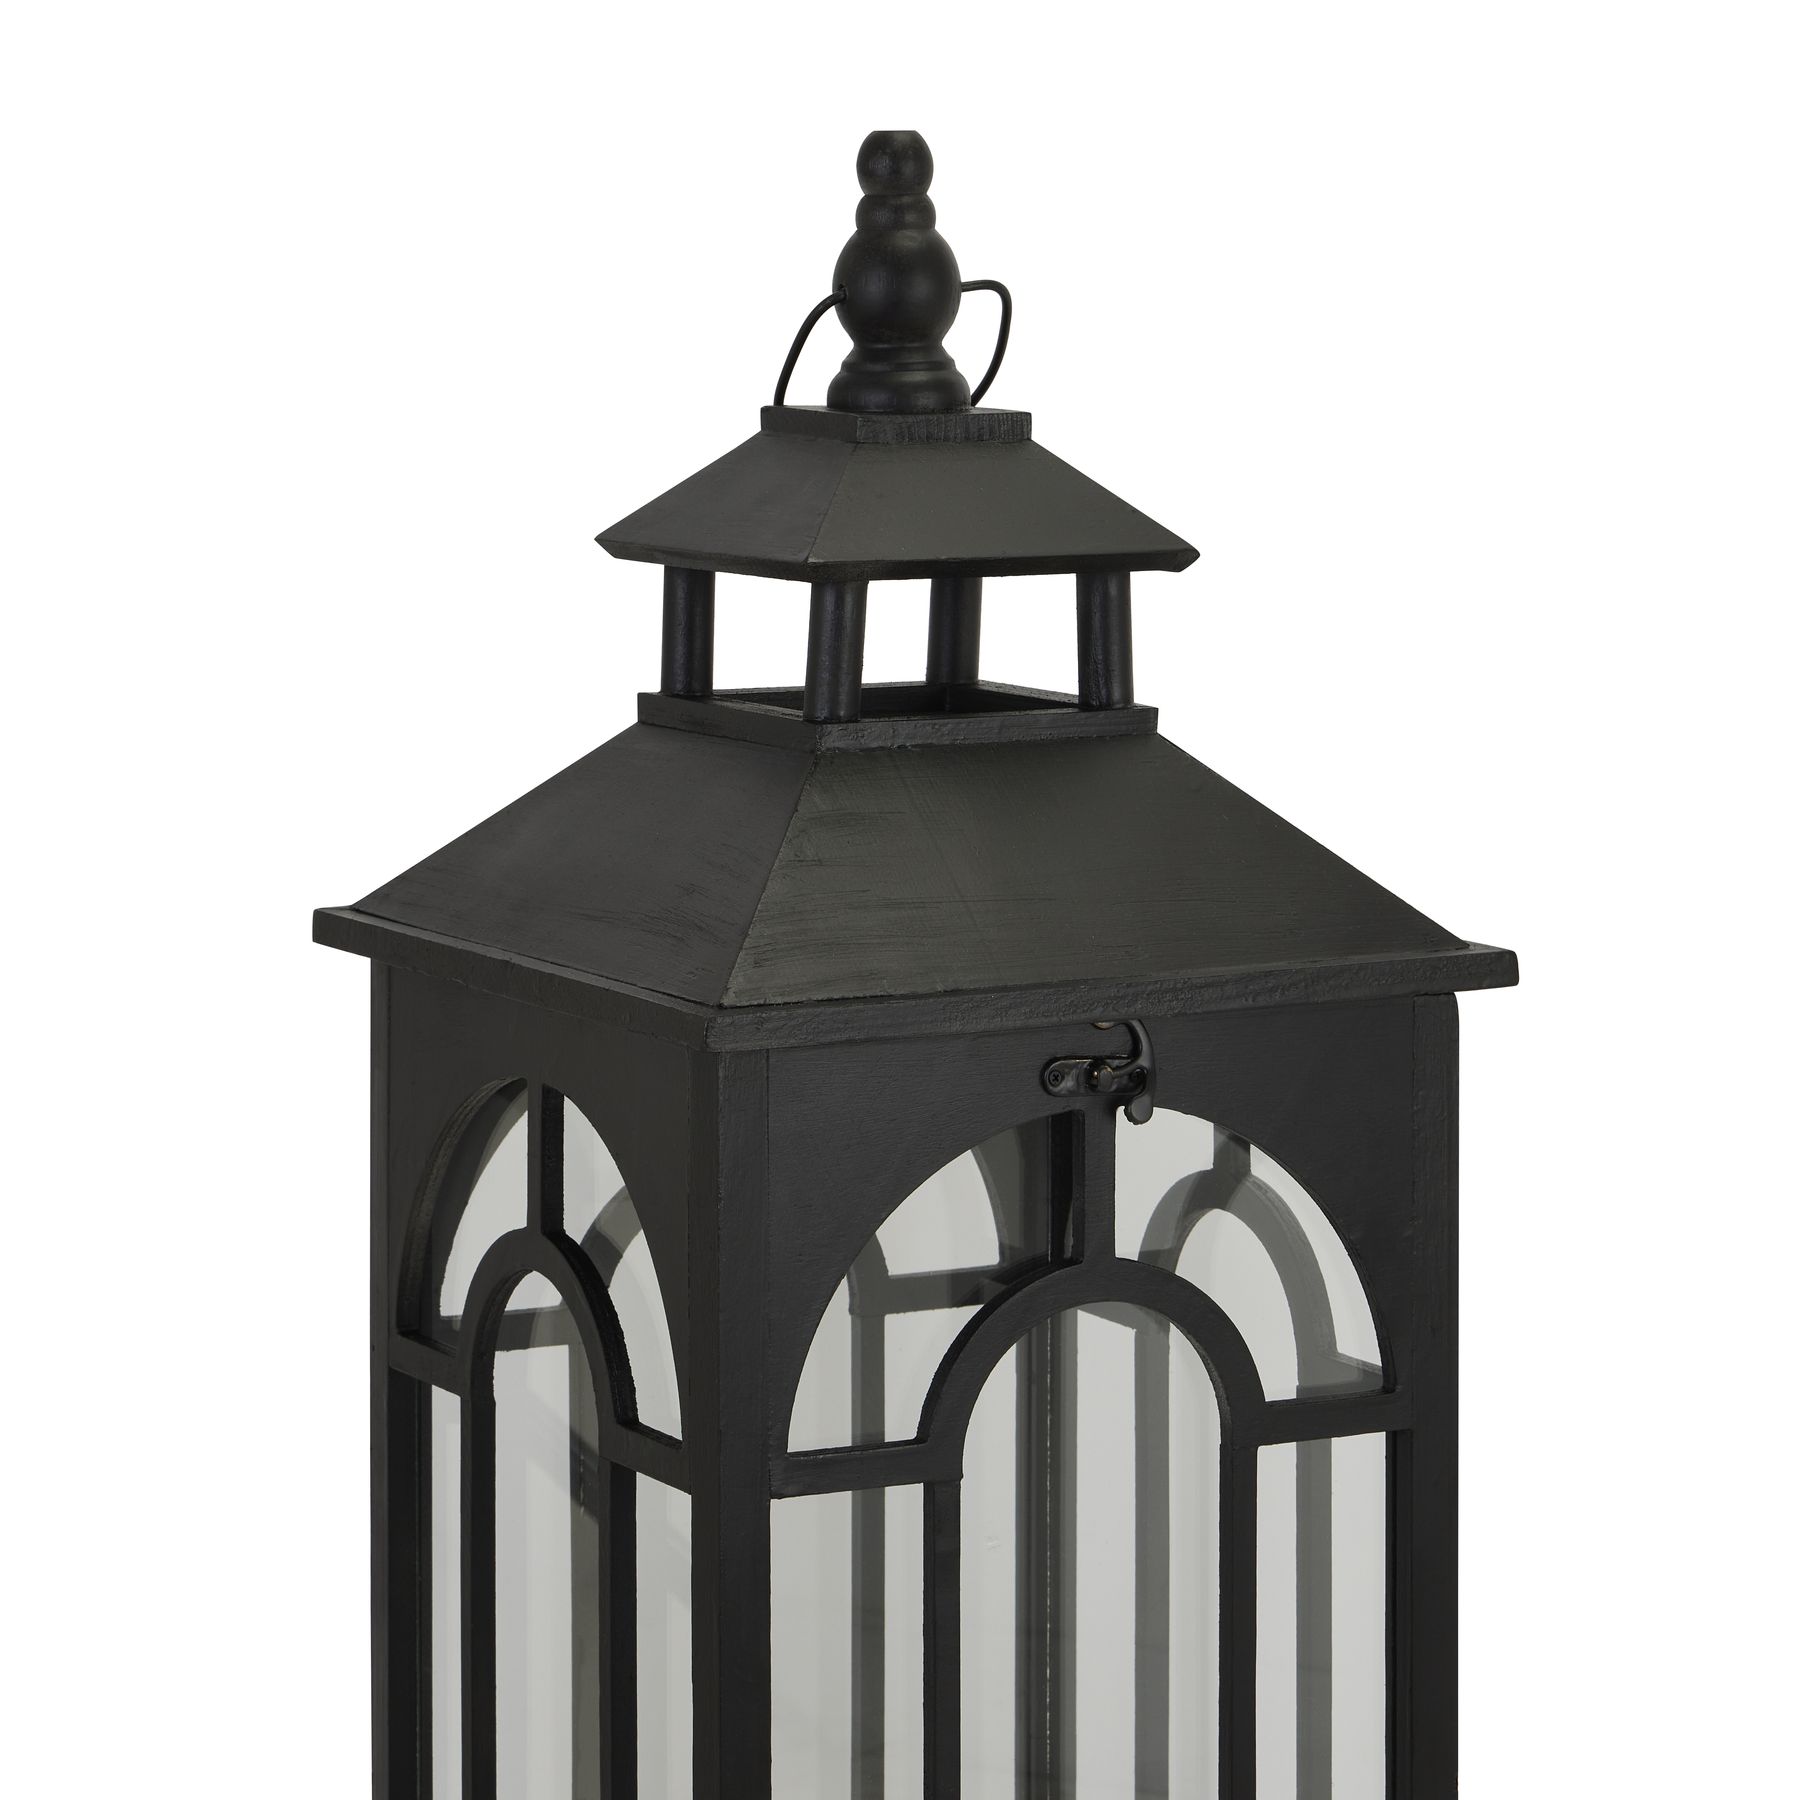 Set Of Three Black Wooden Lanterns With Archway Design - Image 3